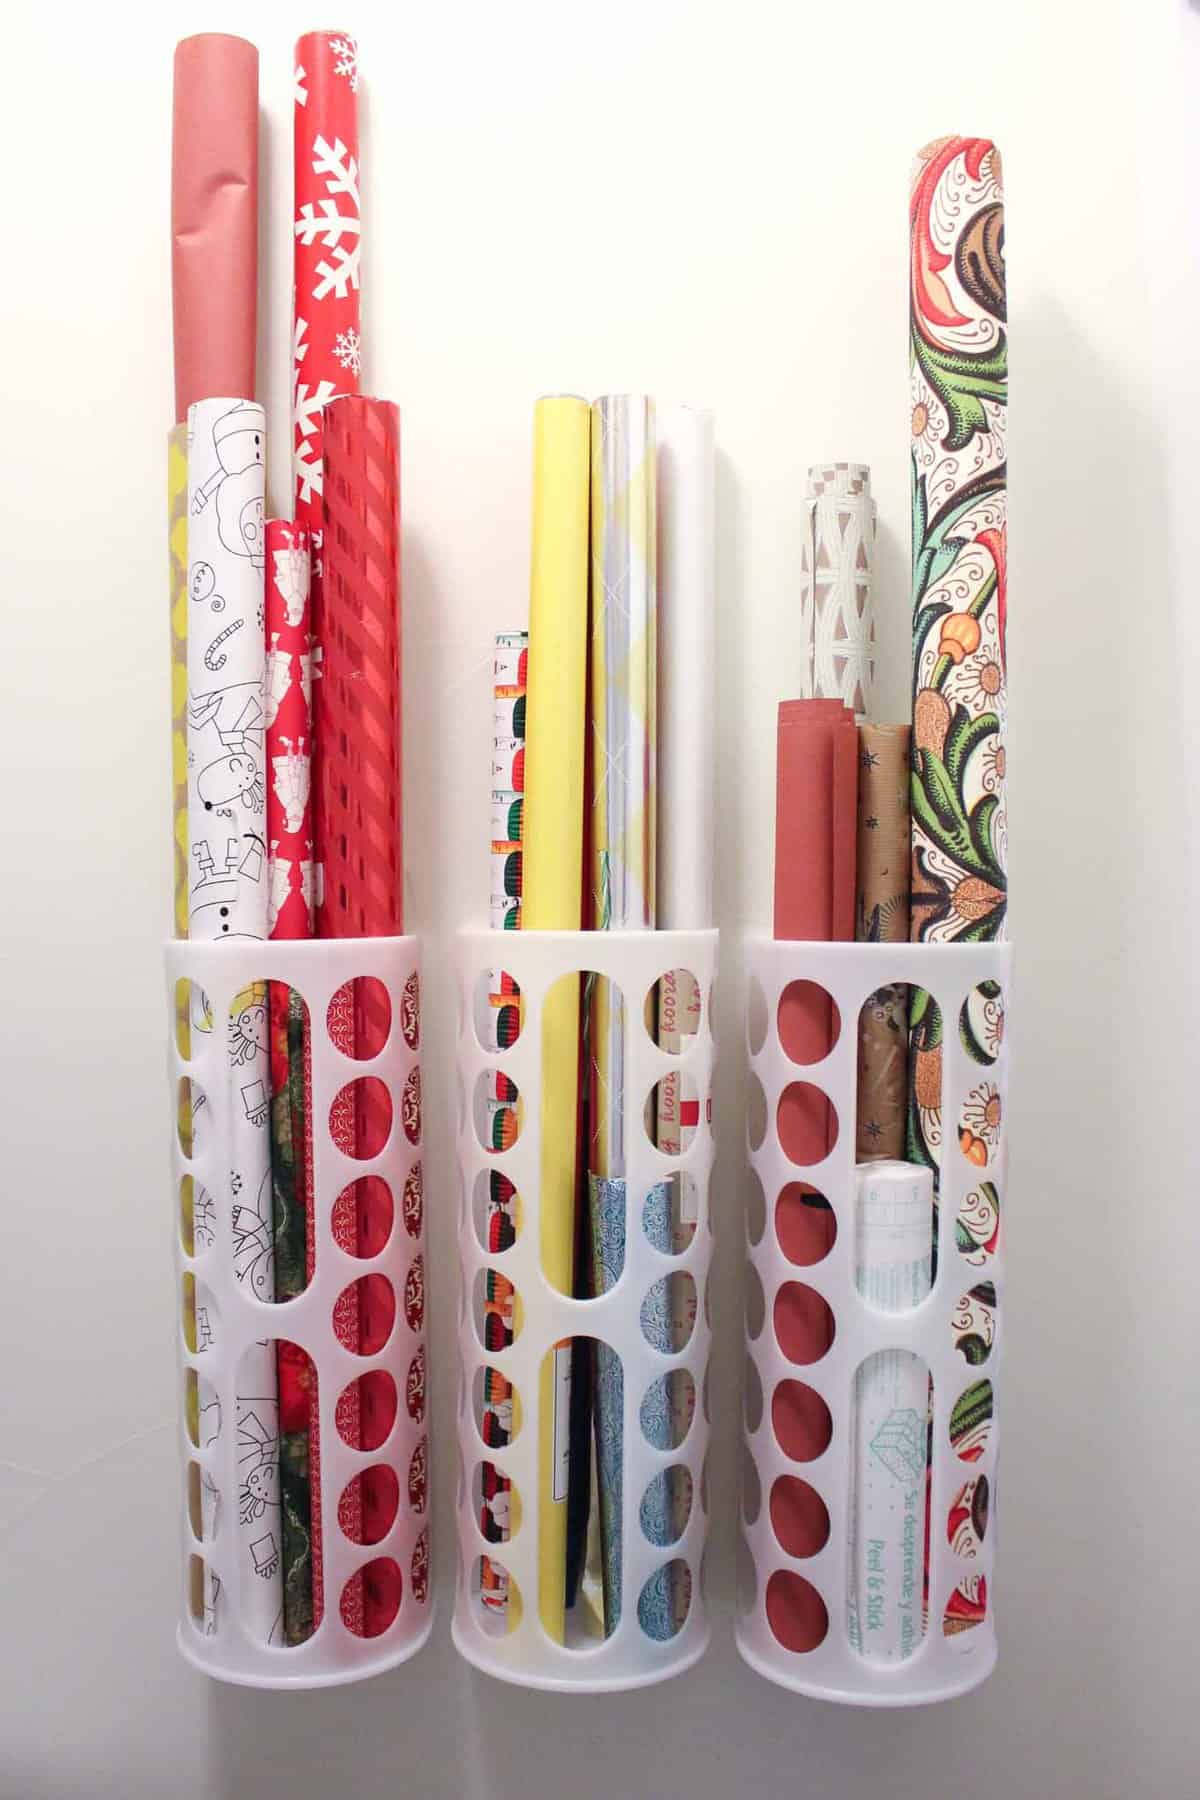 DIY Vertical Wrapping Paper Storage Idea - Ikea Hack!